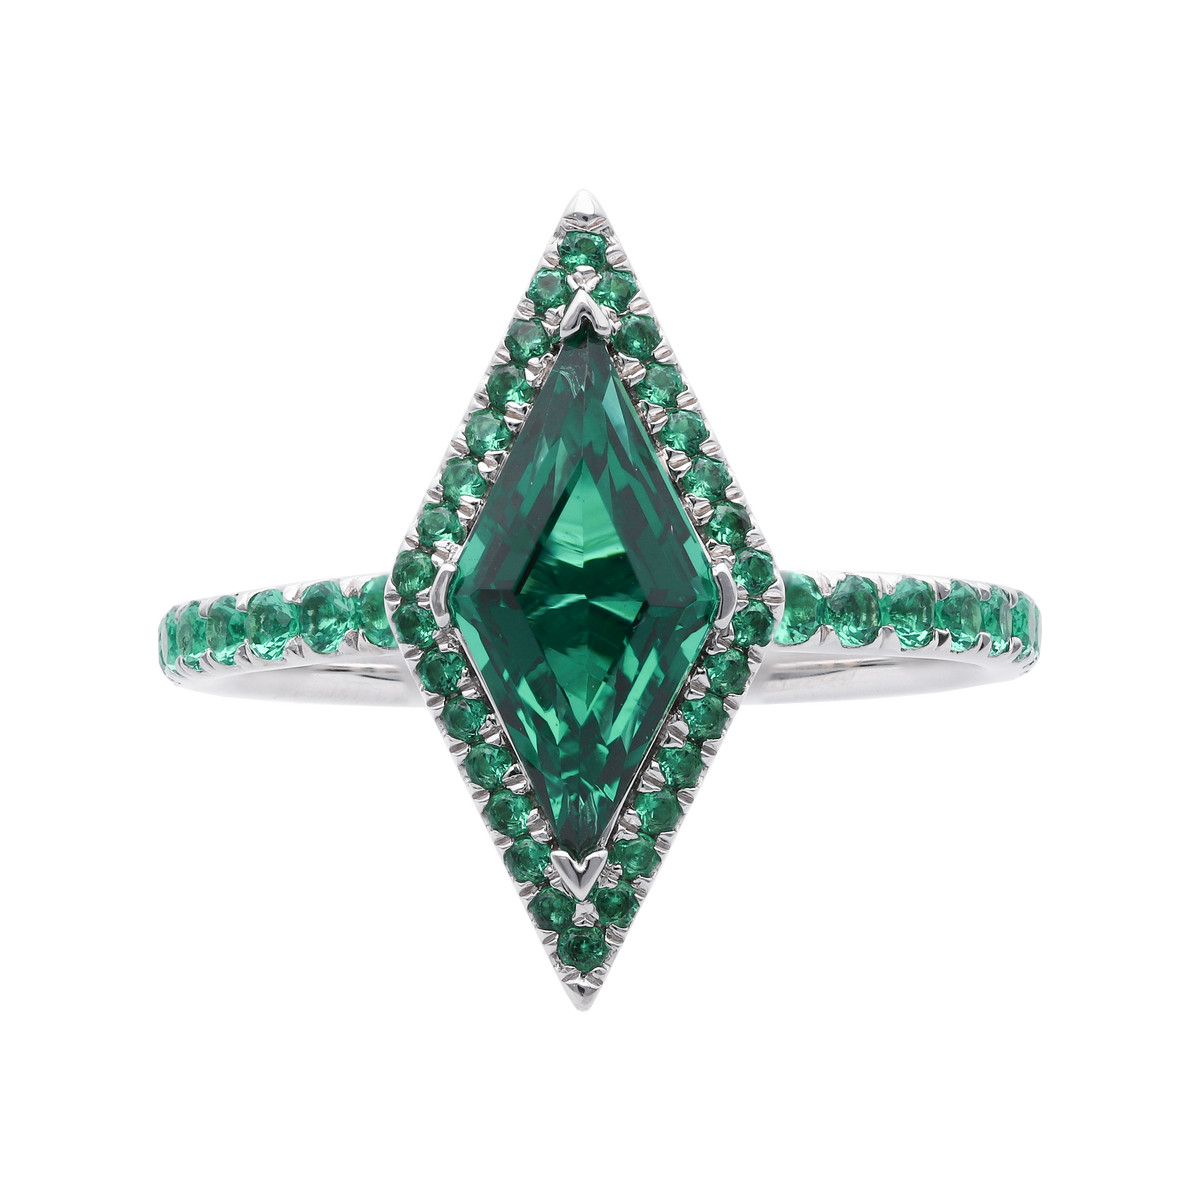 The Emerald Lozenge Ring